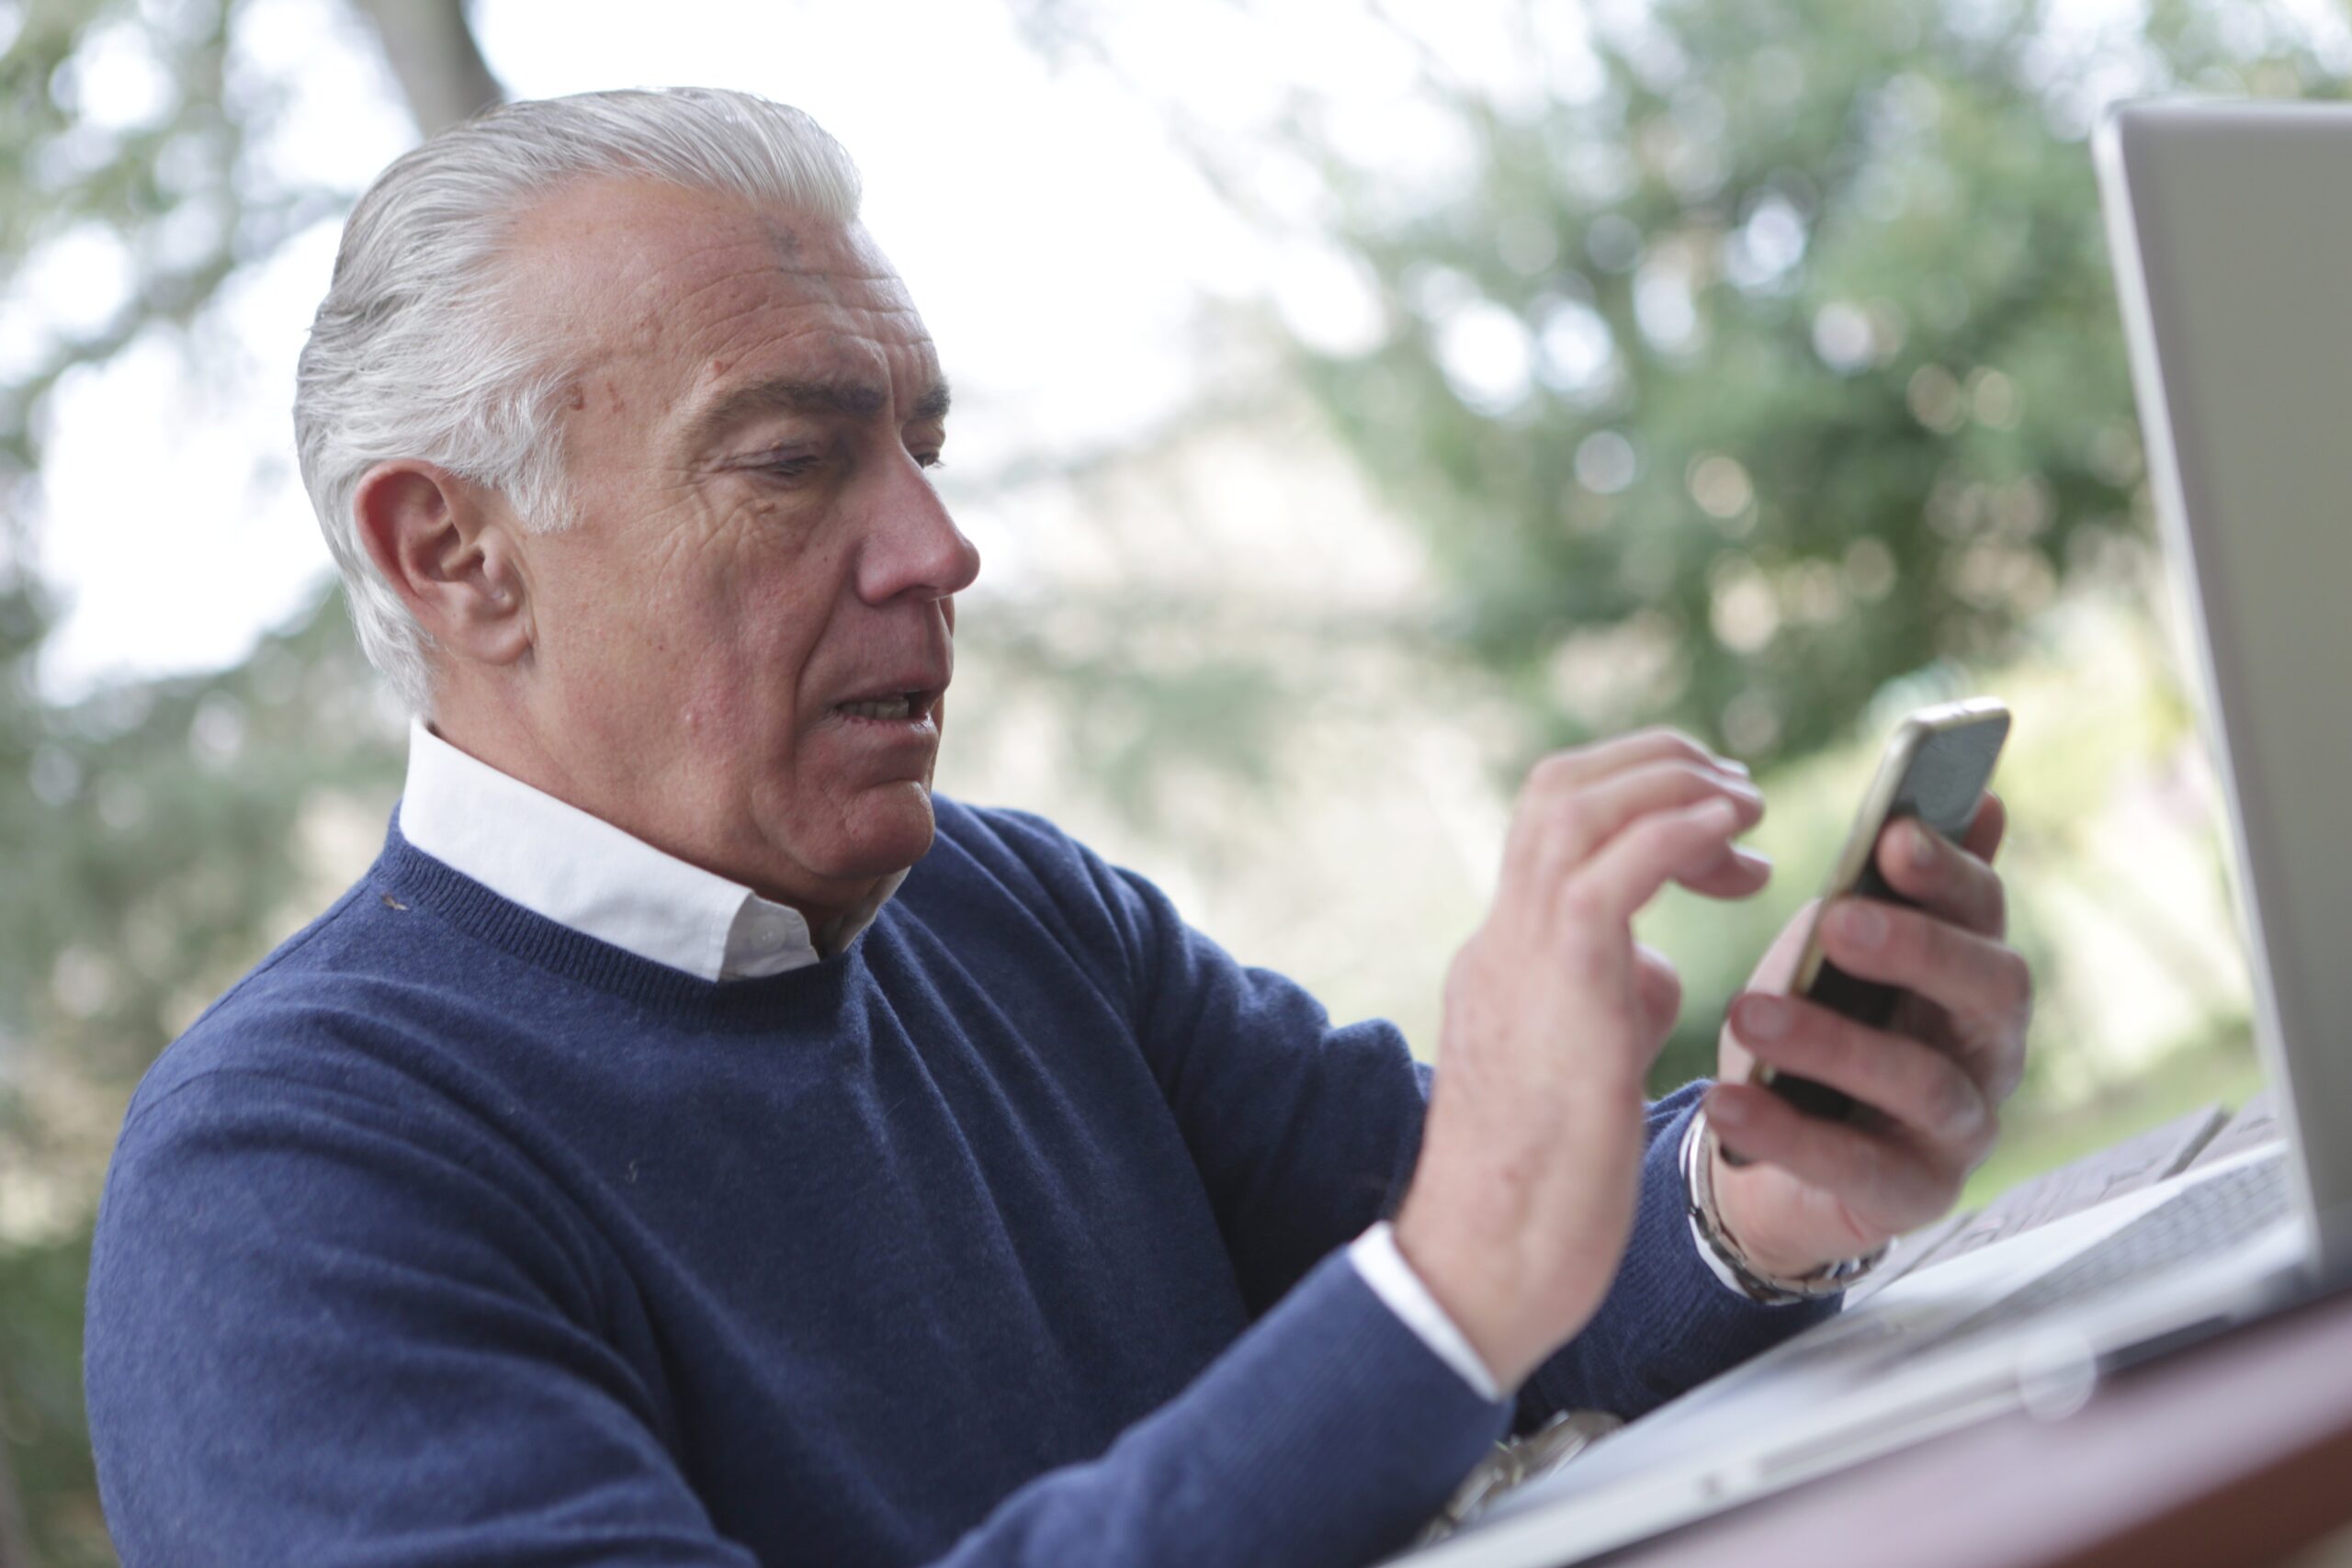 Elderly Gentleman Typing on Mobile Phone